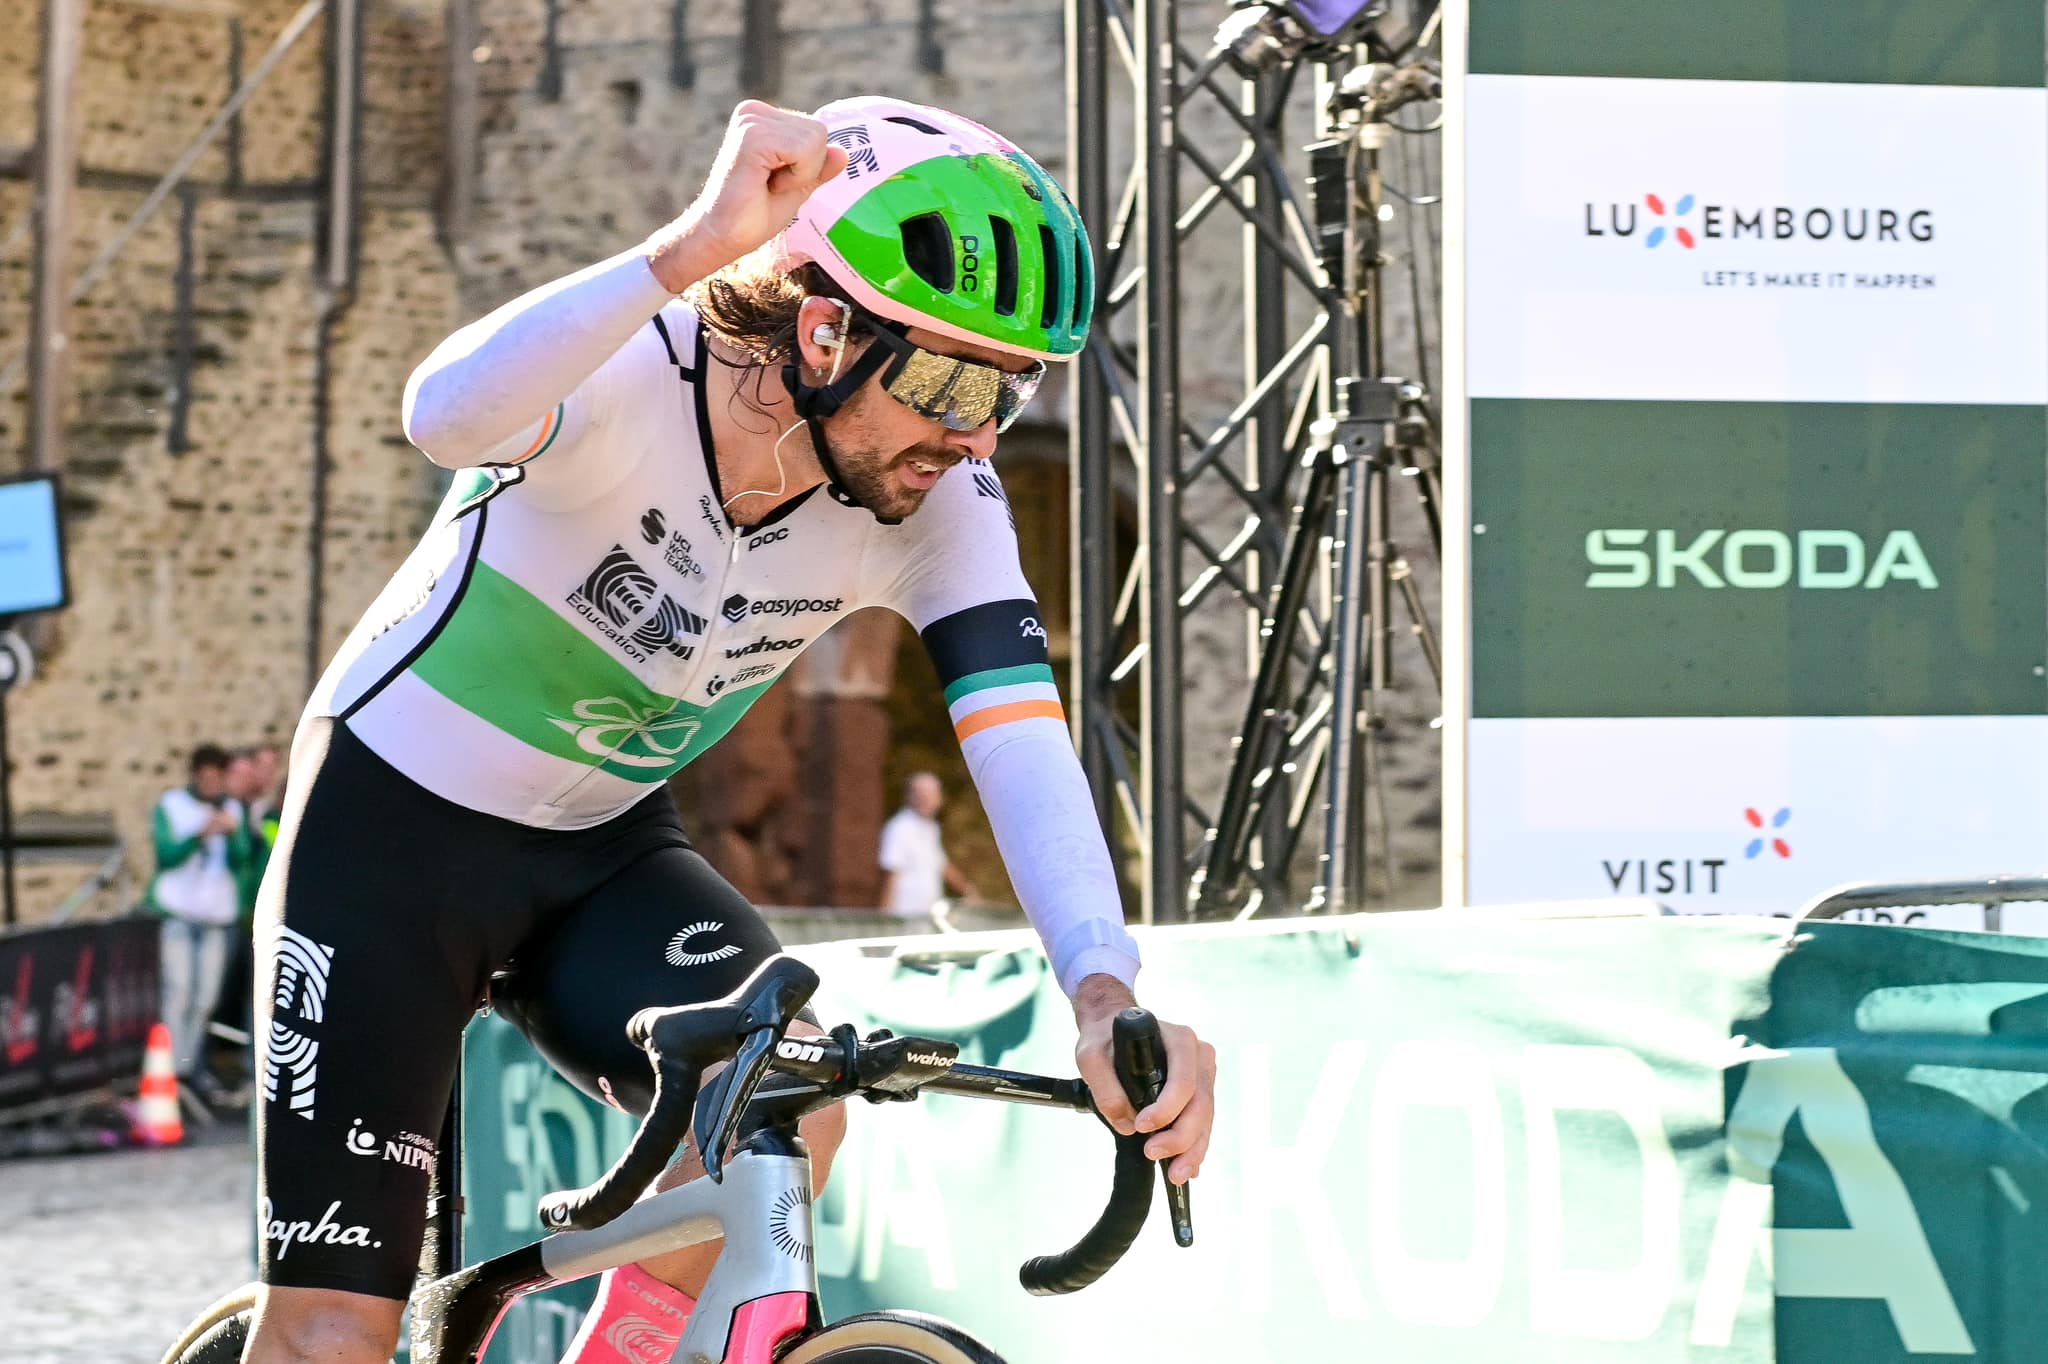 Ben Healy vence etapa 3 do Skoda Tour de Luxembourg e assume a liderança da geral!